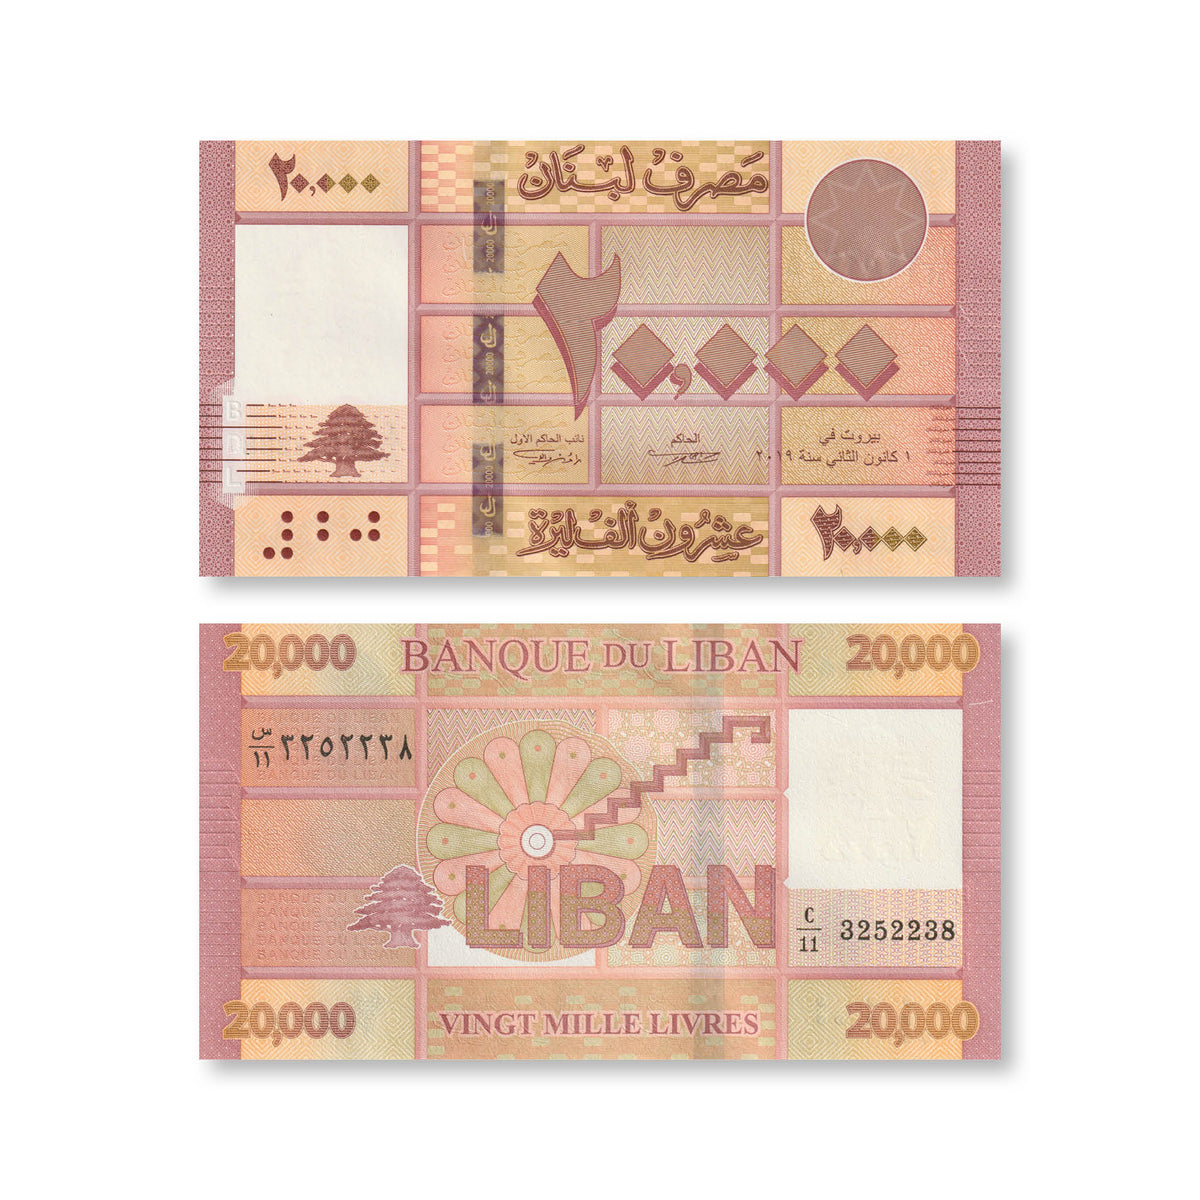 Lebanon 20000 Pounds, 2019, B544a, P93, UNC - Robert's World Money - World Banknotes